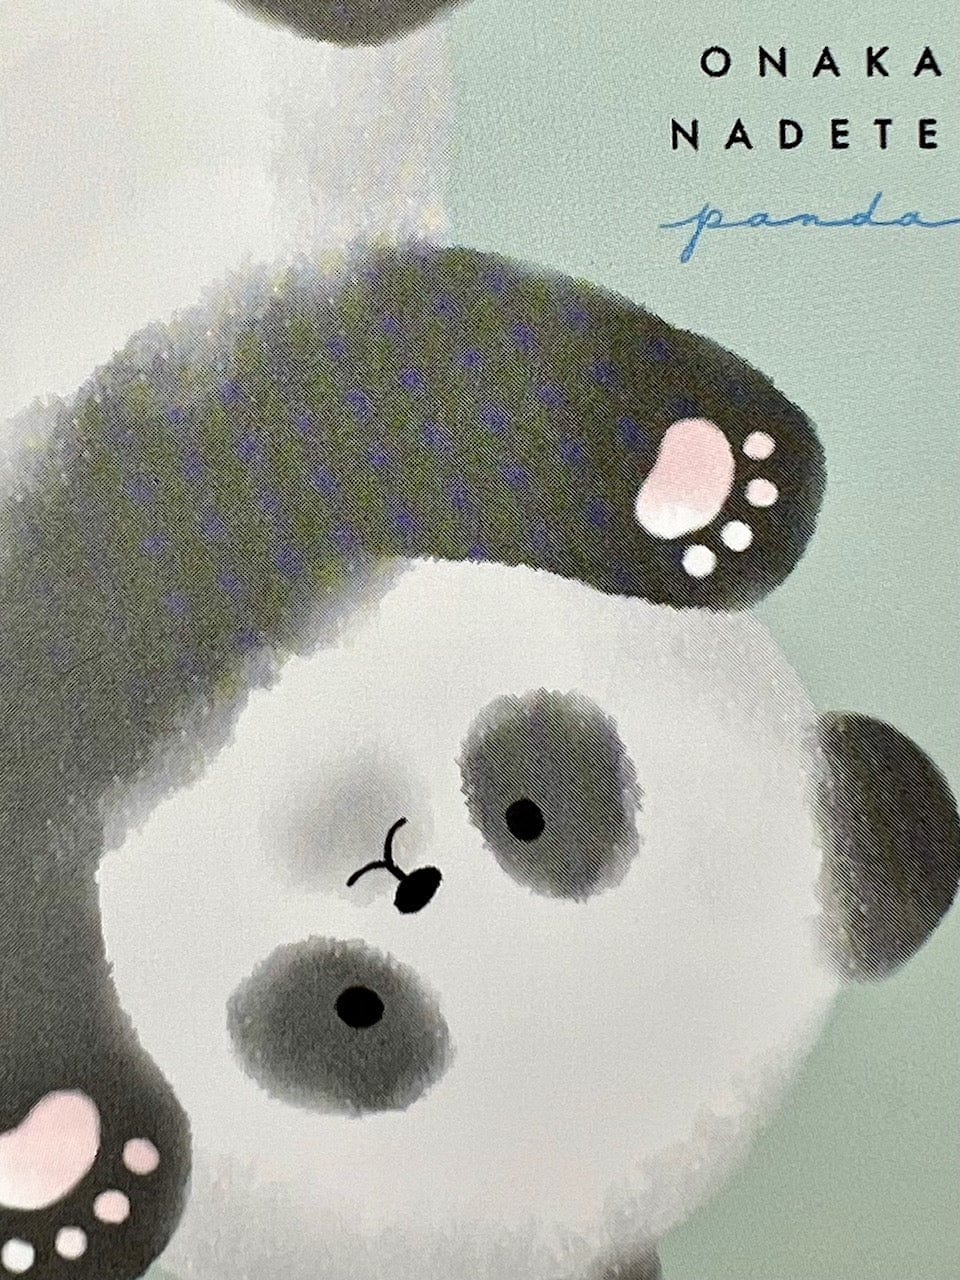 CRUX Panda Onaka Nadetei Mini Notepad